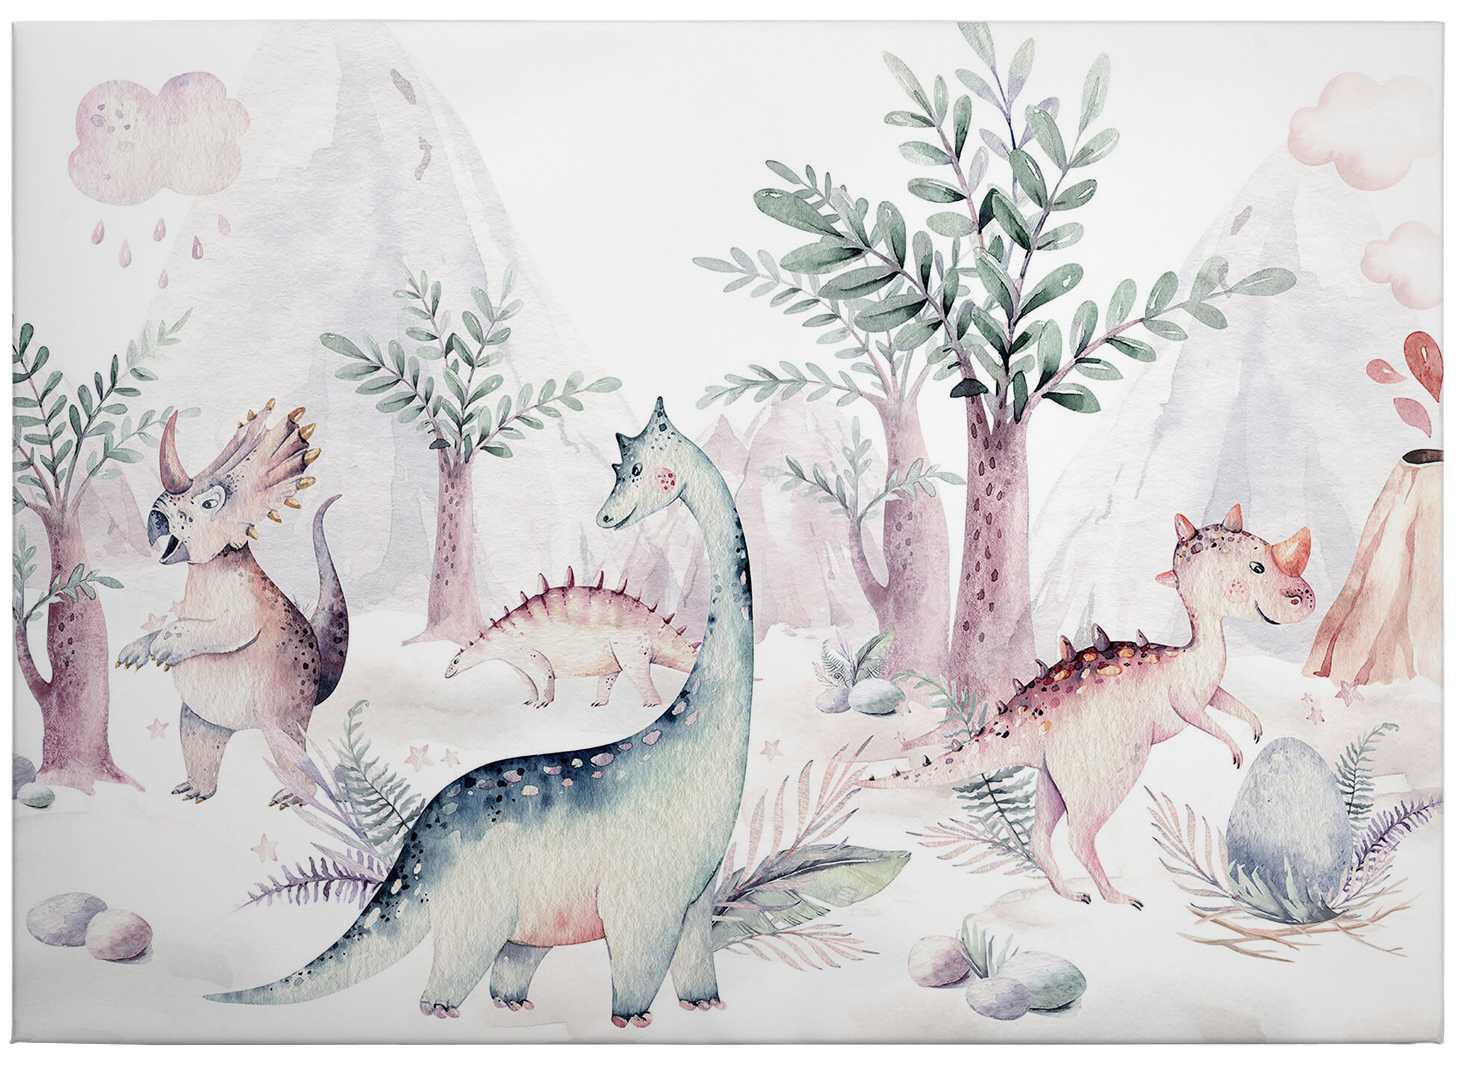             Leinwandbild Dinosaurier Kinder Aquarell von Kvilis – 0,70 m x 0,50 m
        